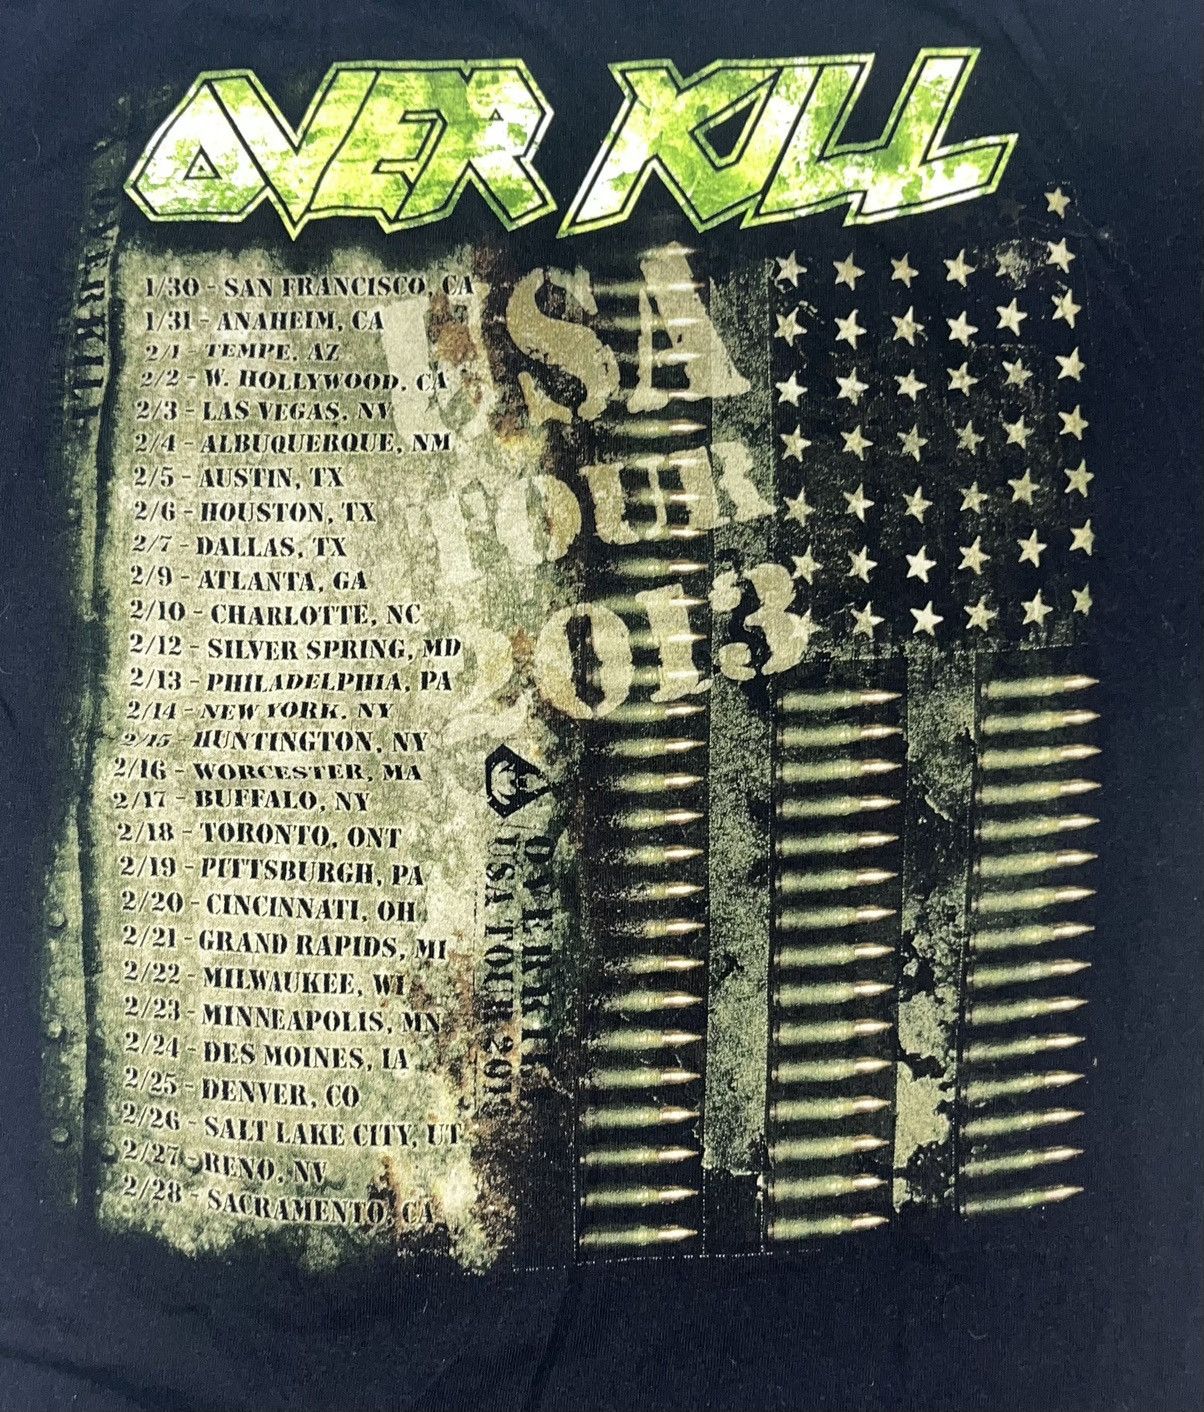 Band Tees Overkill 2013 Official Tour Shirt Size US XL / EU 56 / 4 - 6 Preview